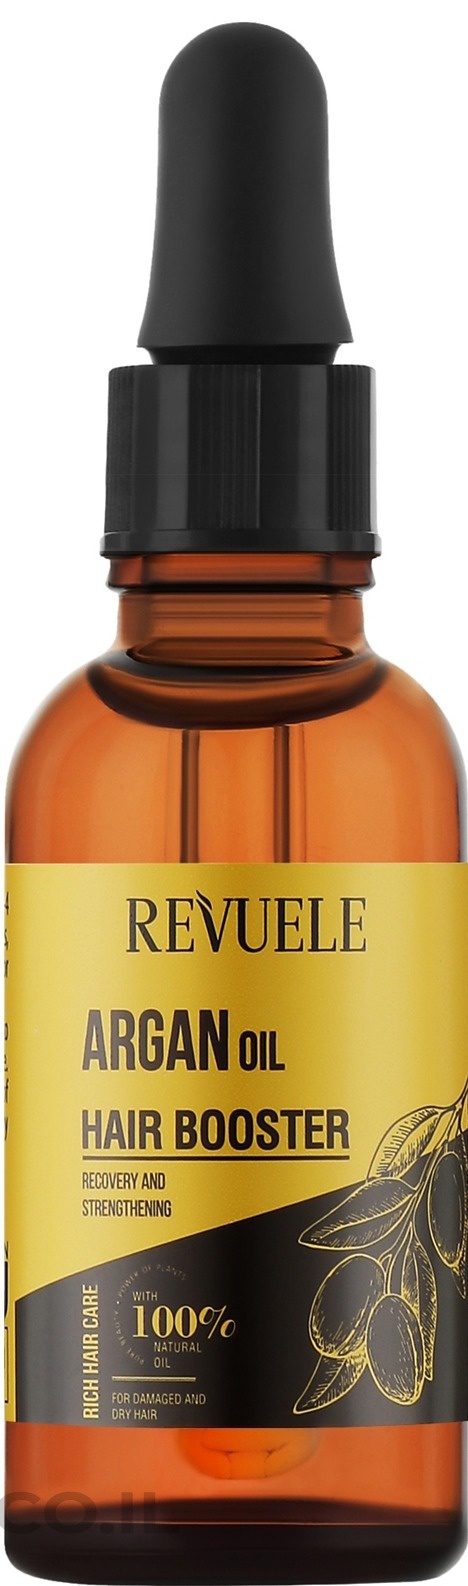 Revuele Argan Oil Hair Booster